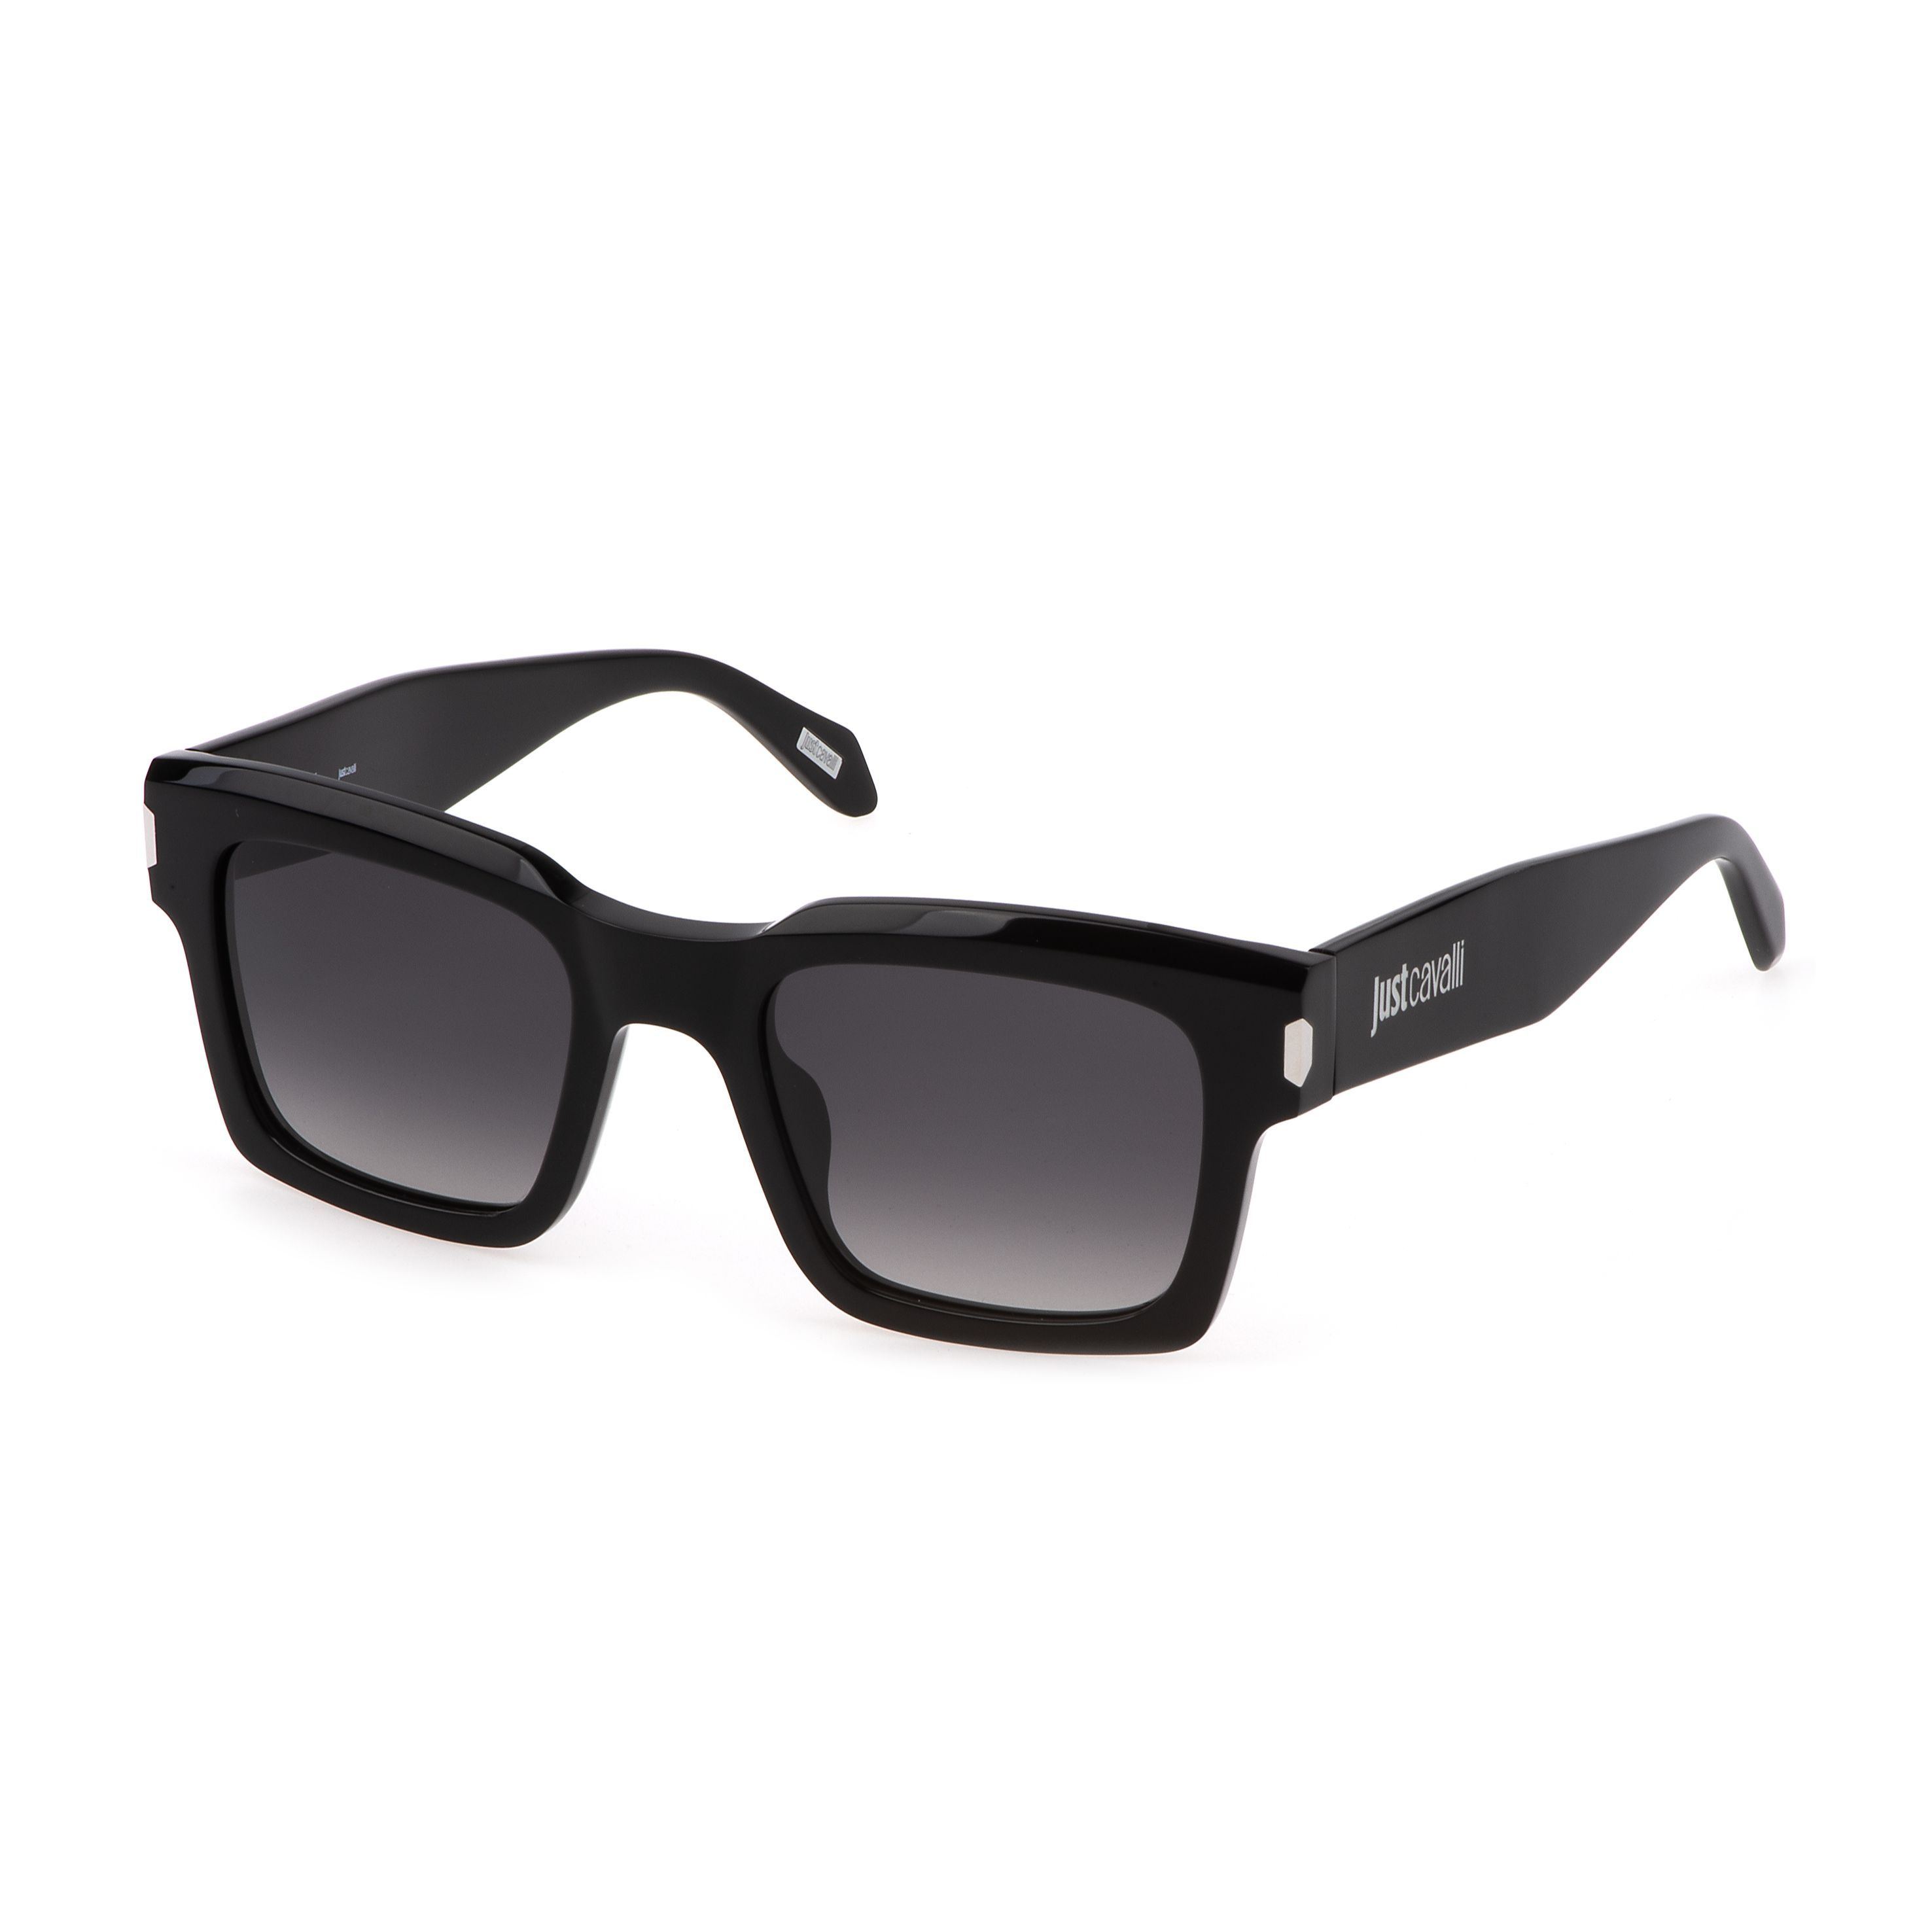 SJC026 Square Sunglasses 700Y - size 52